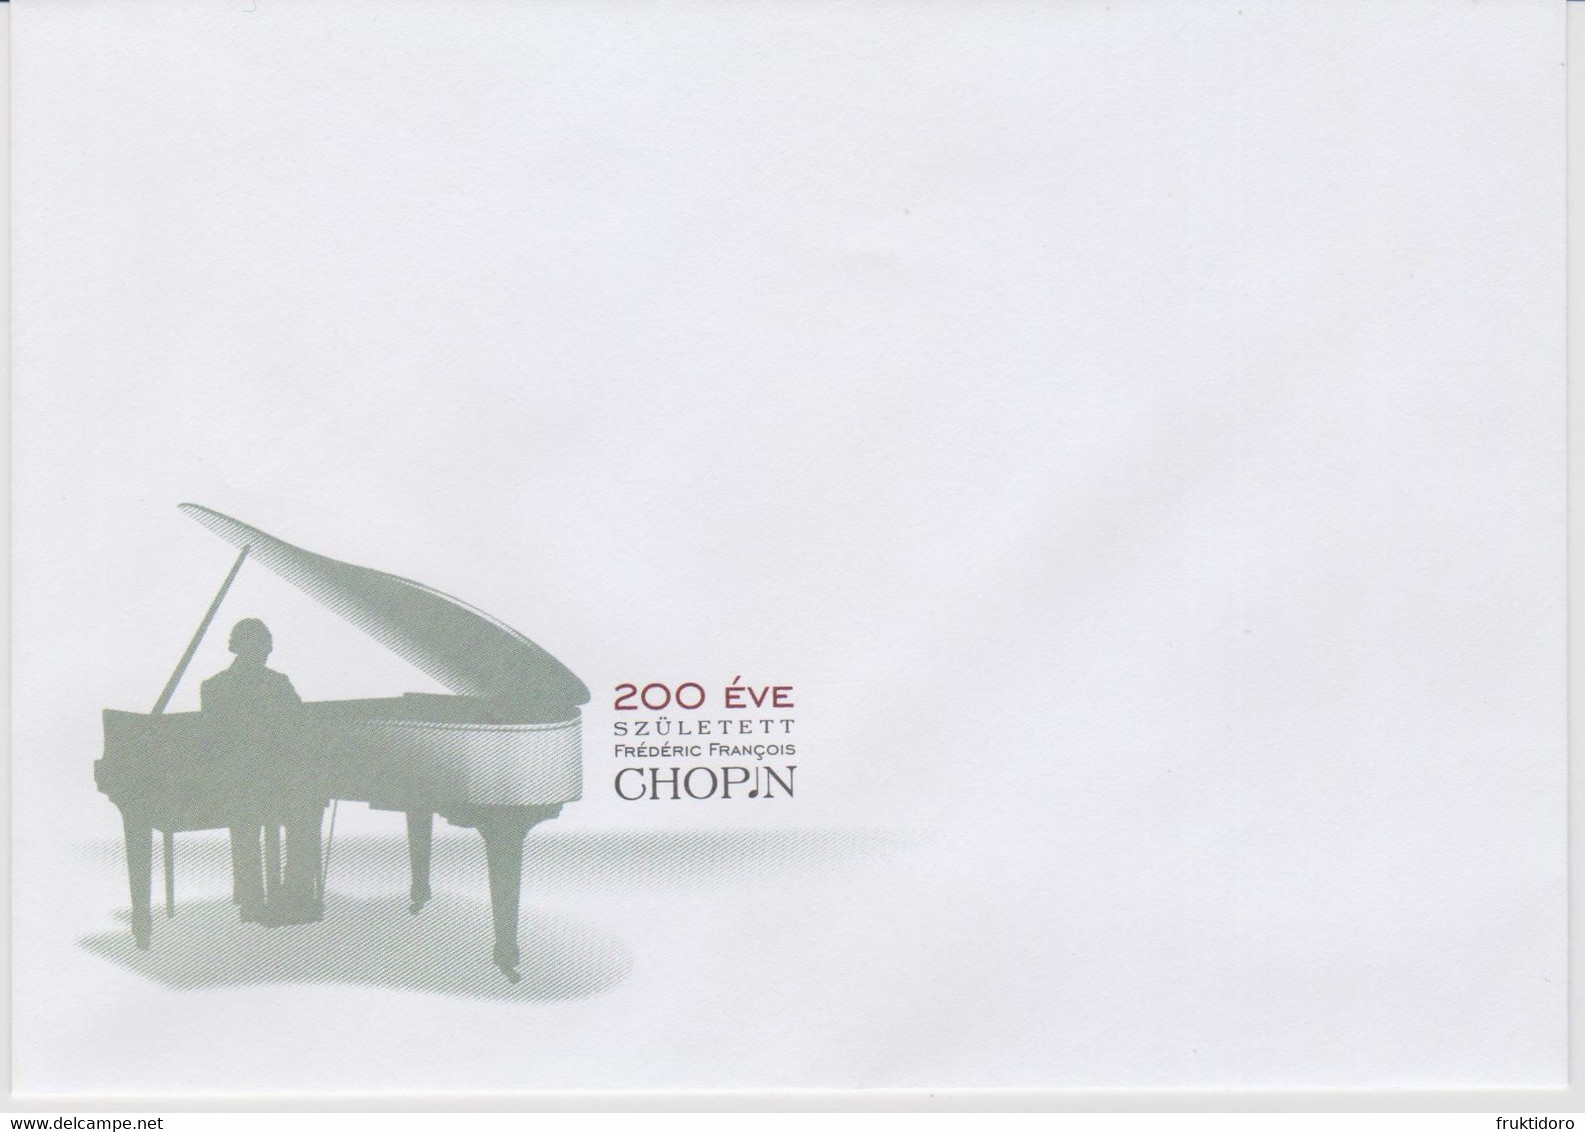 Hungary Envelope For FDC Mi 5480 Frederic Chopin 200 Anniversary - 2010 - Servizio